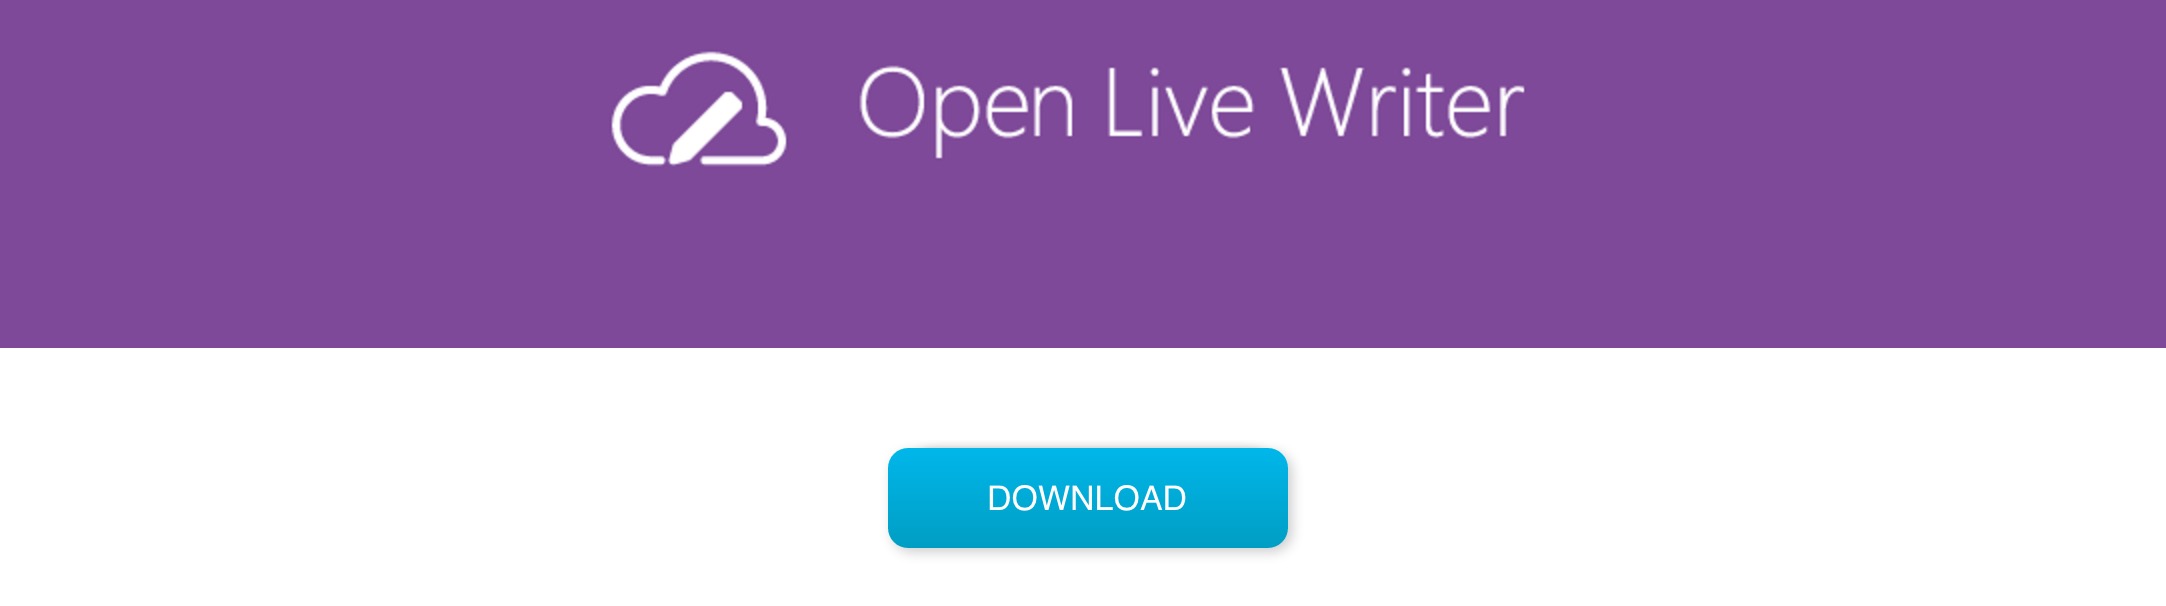 Windows Live Writer完成开源并推出Open Live Writer分支